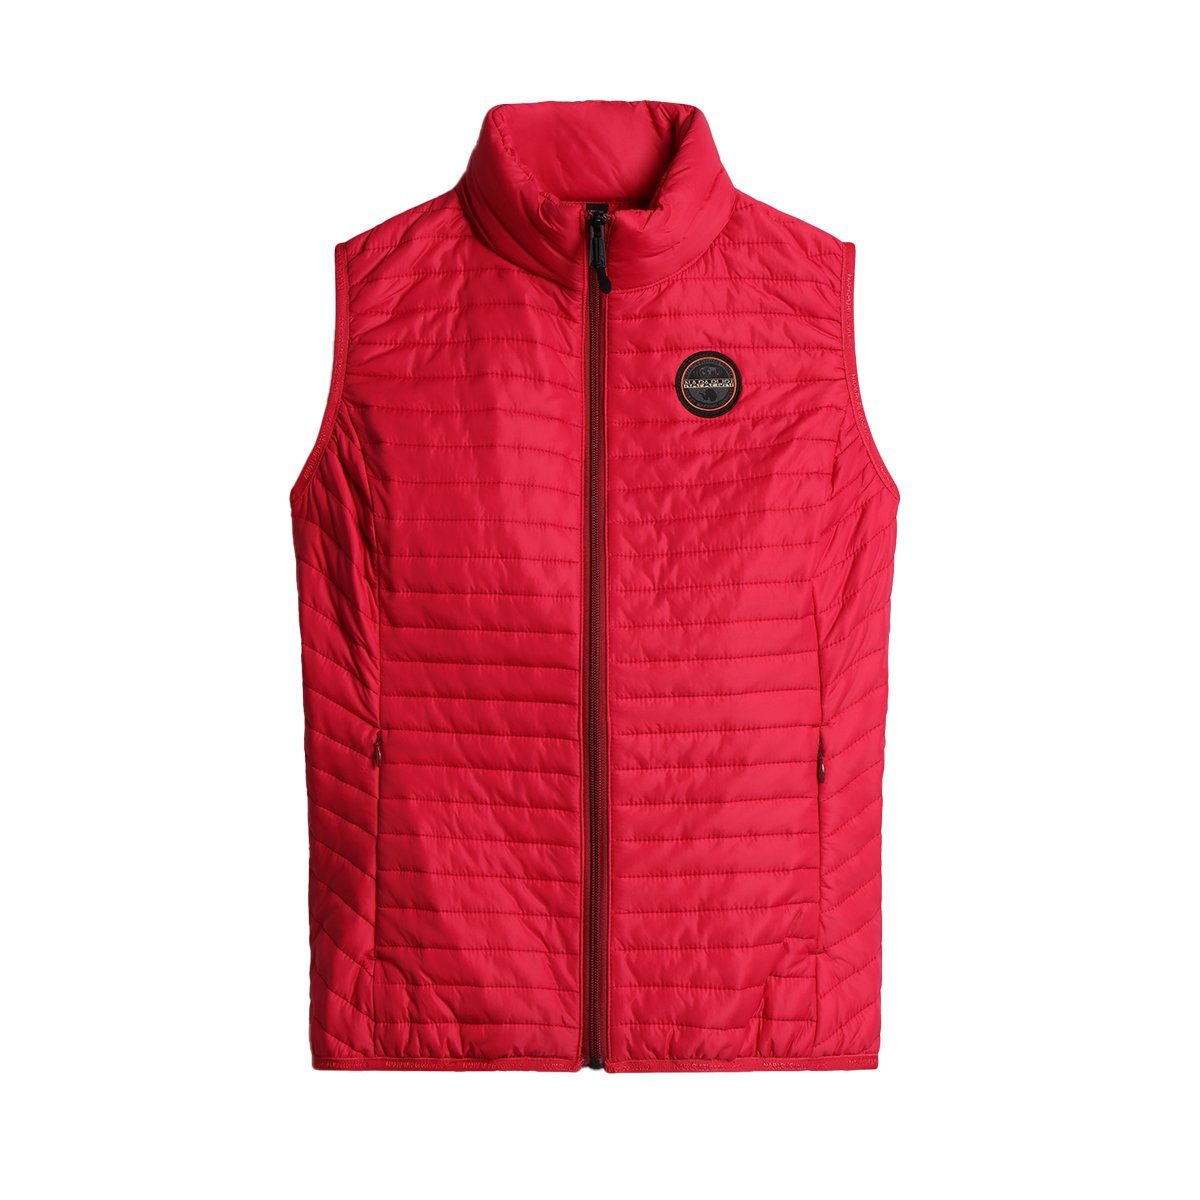 Napapijri Steppweste für NP0A4GY2 Red(R1C1) Damen Vest W mit Markenpatch Persian Acalmar 5